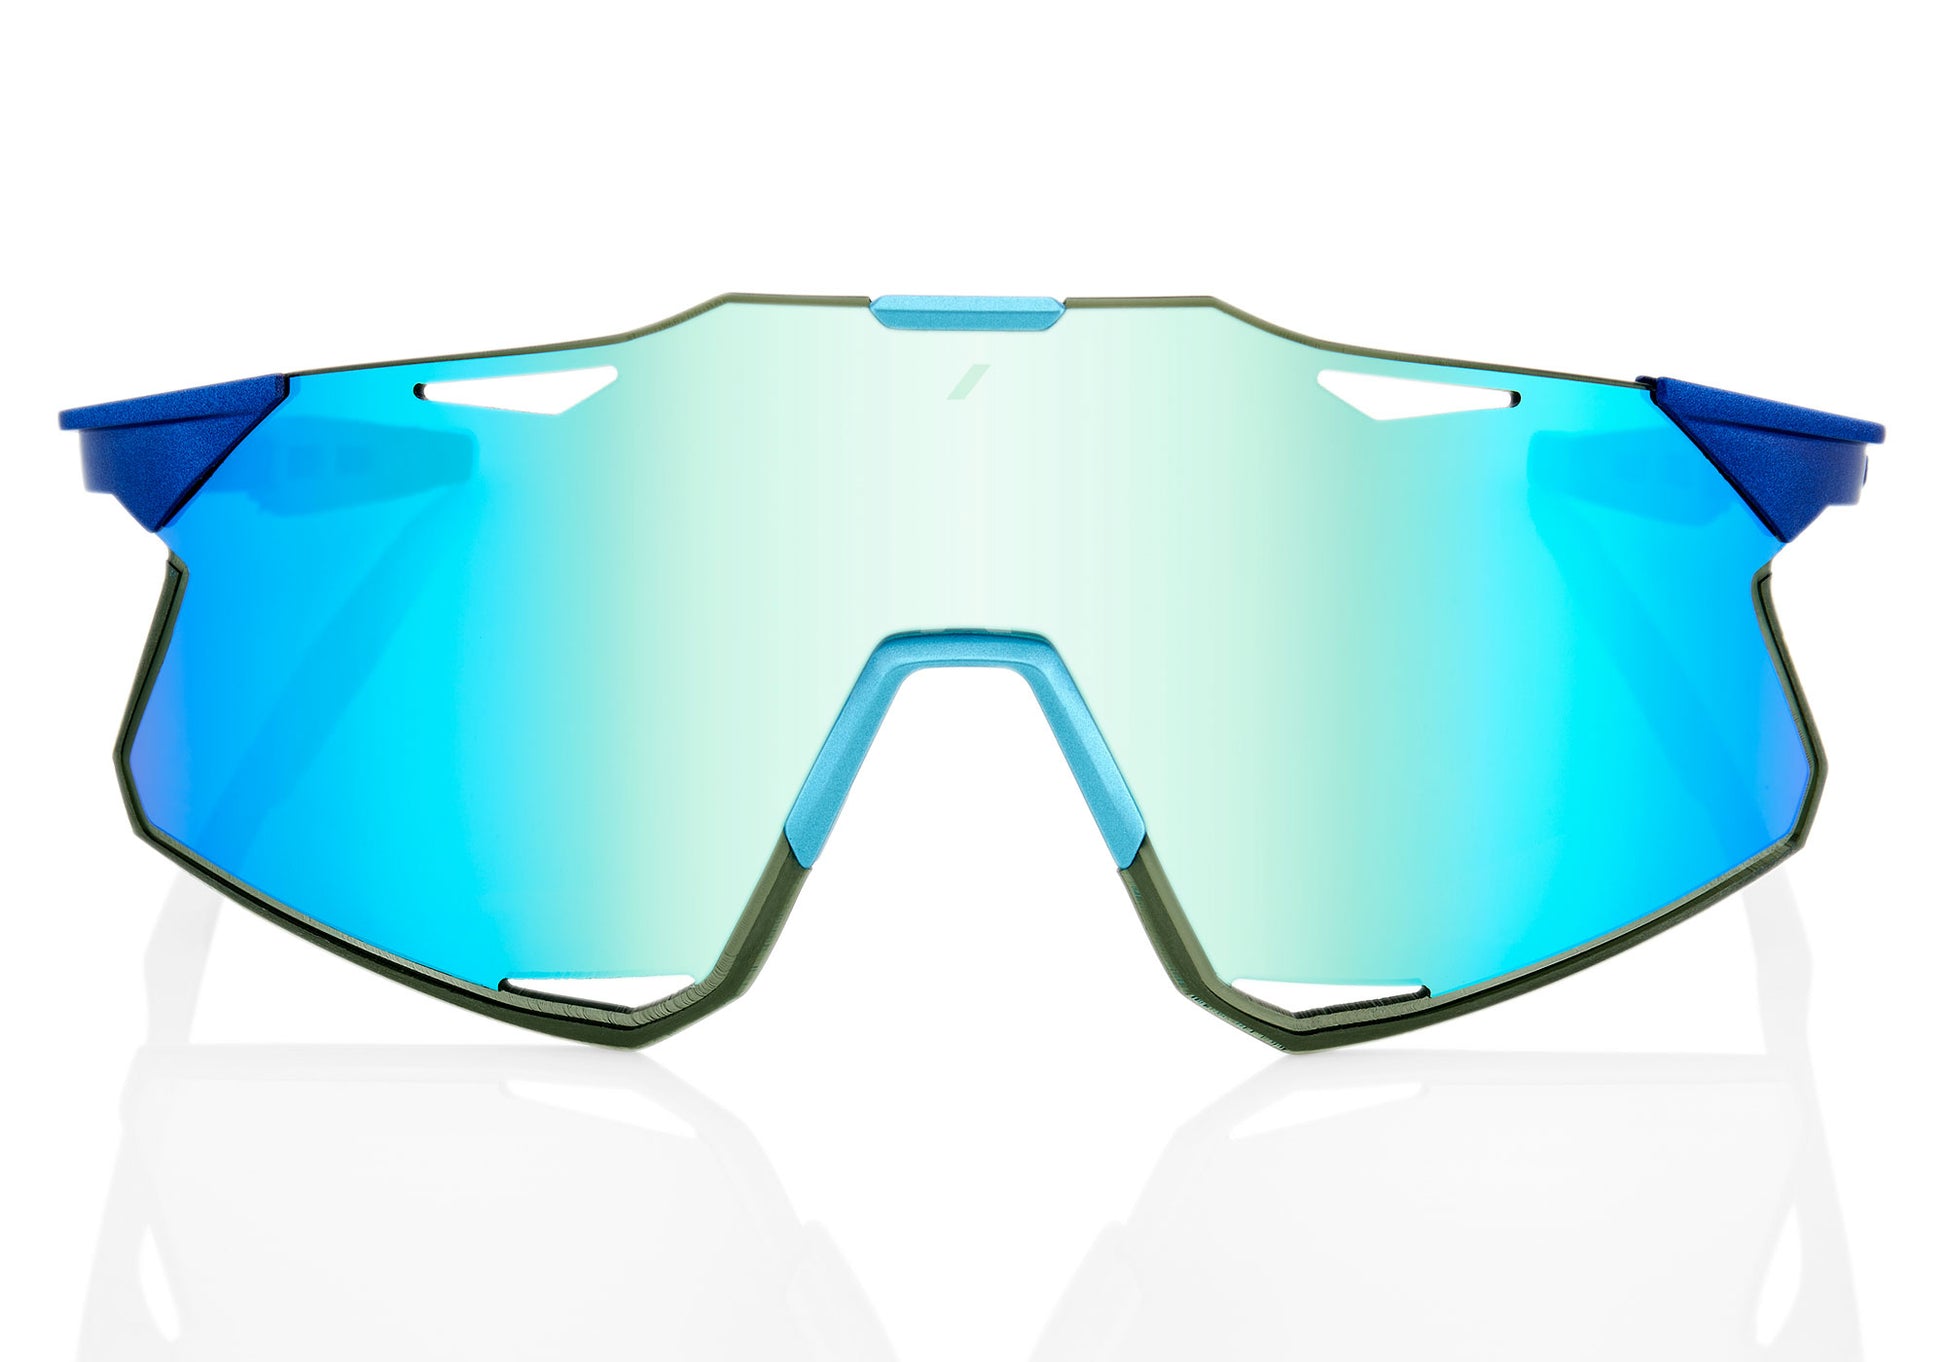 100% Hypercraft M Metallic/B Topaz Cycling Sunglasses